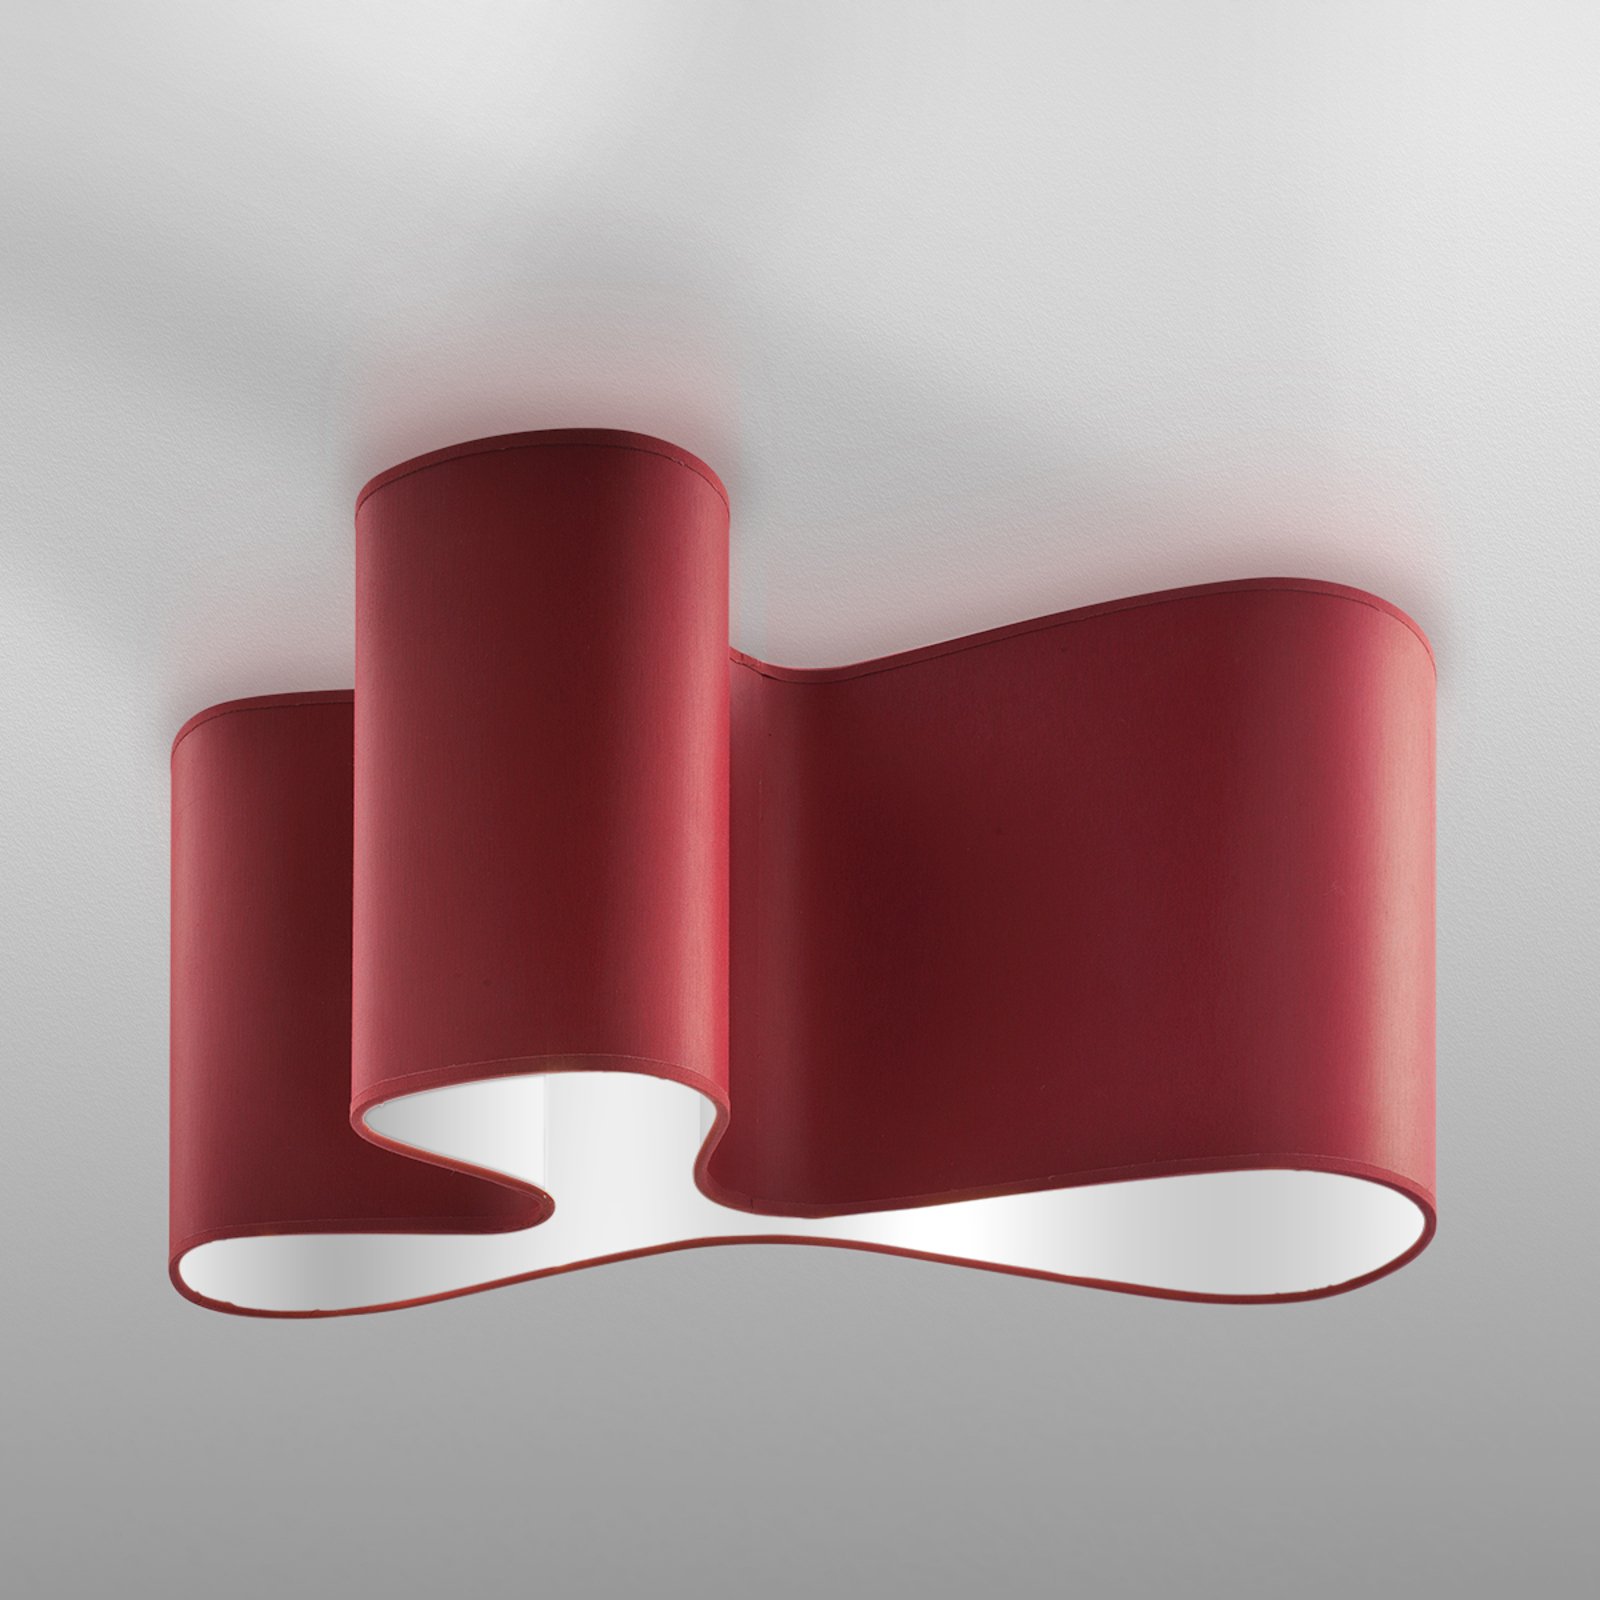 Plafonnier design Mugello rouge/blanc